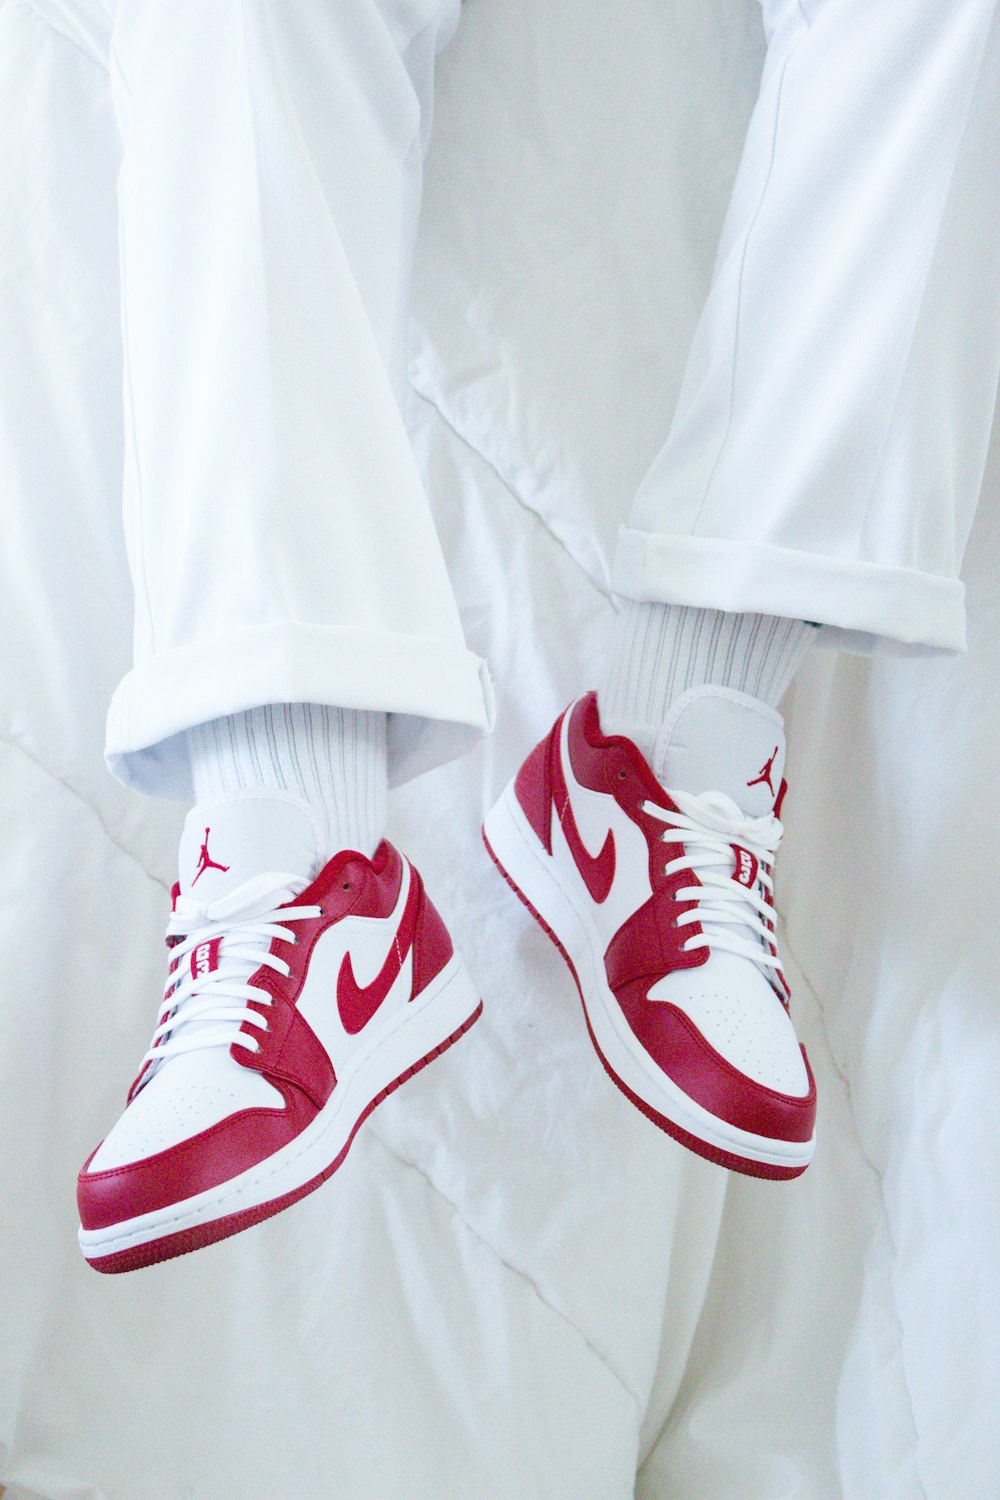 Foto Tenis rojos blancos – gratis en Unsplash